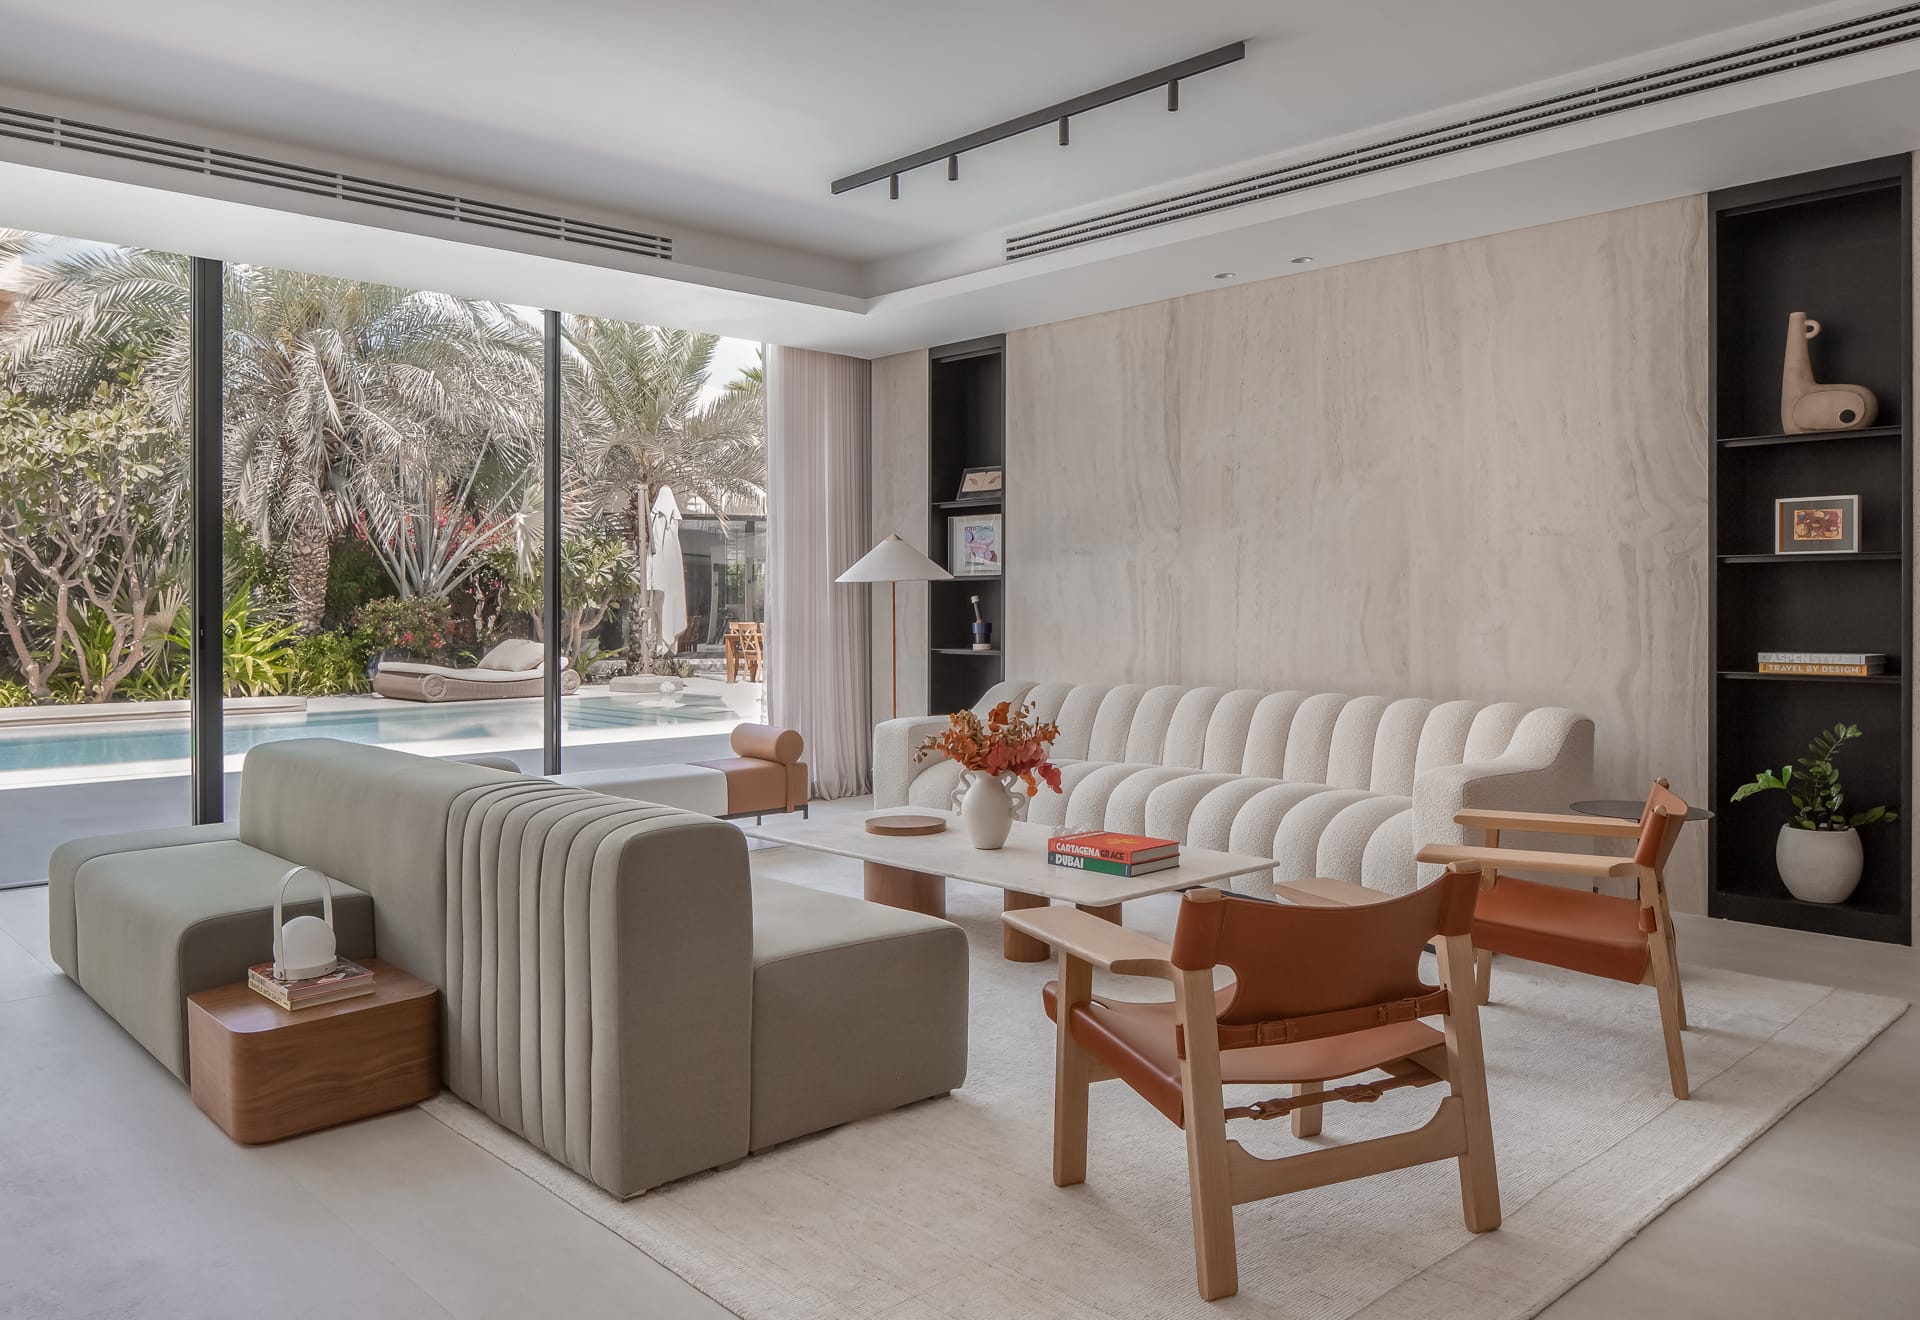 Smart Renovation Design & Fit-Out Company in Dubai presents beautiful Modern Bogota villa renovation.